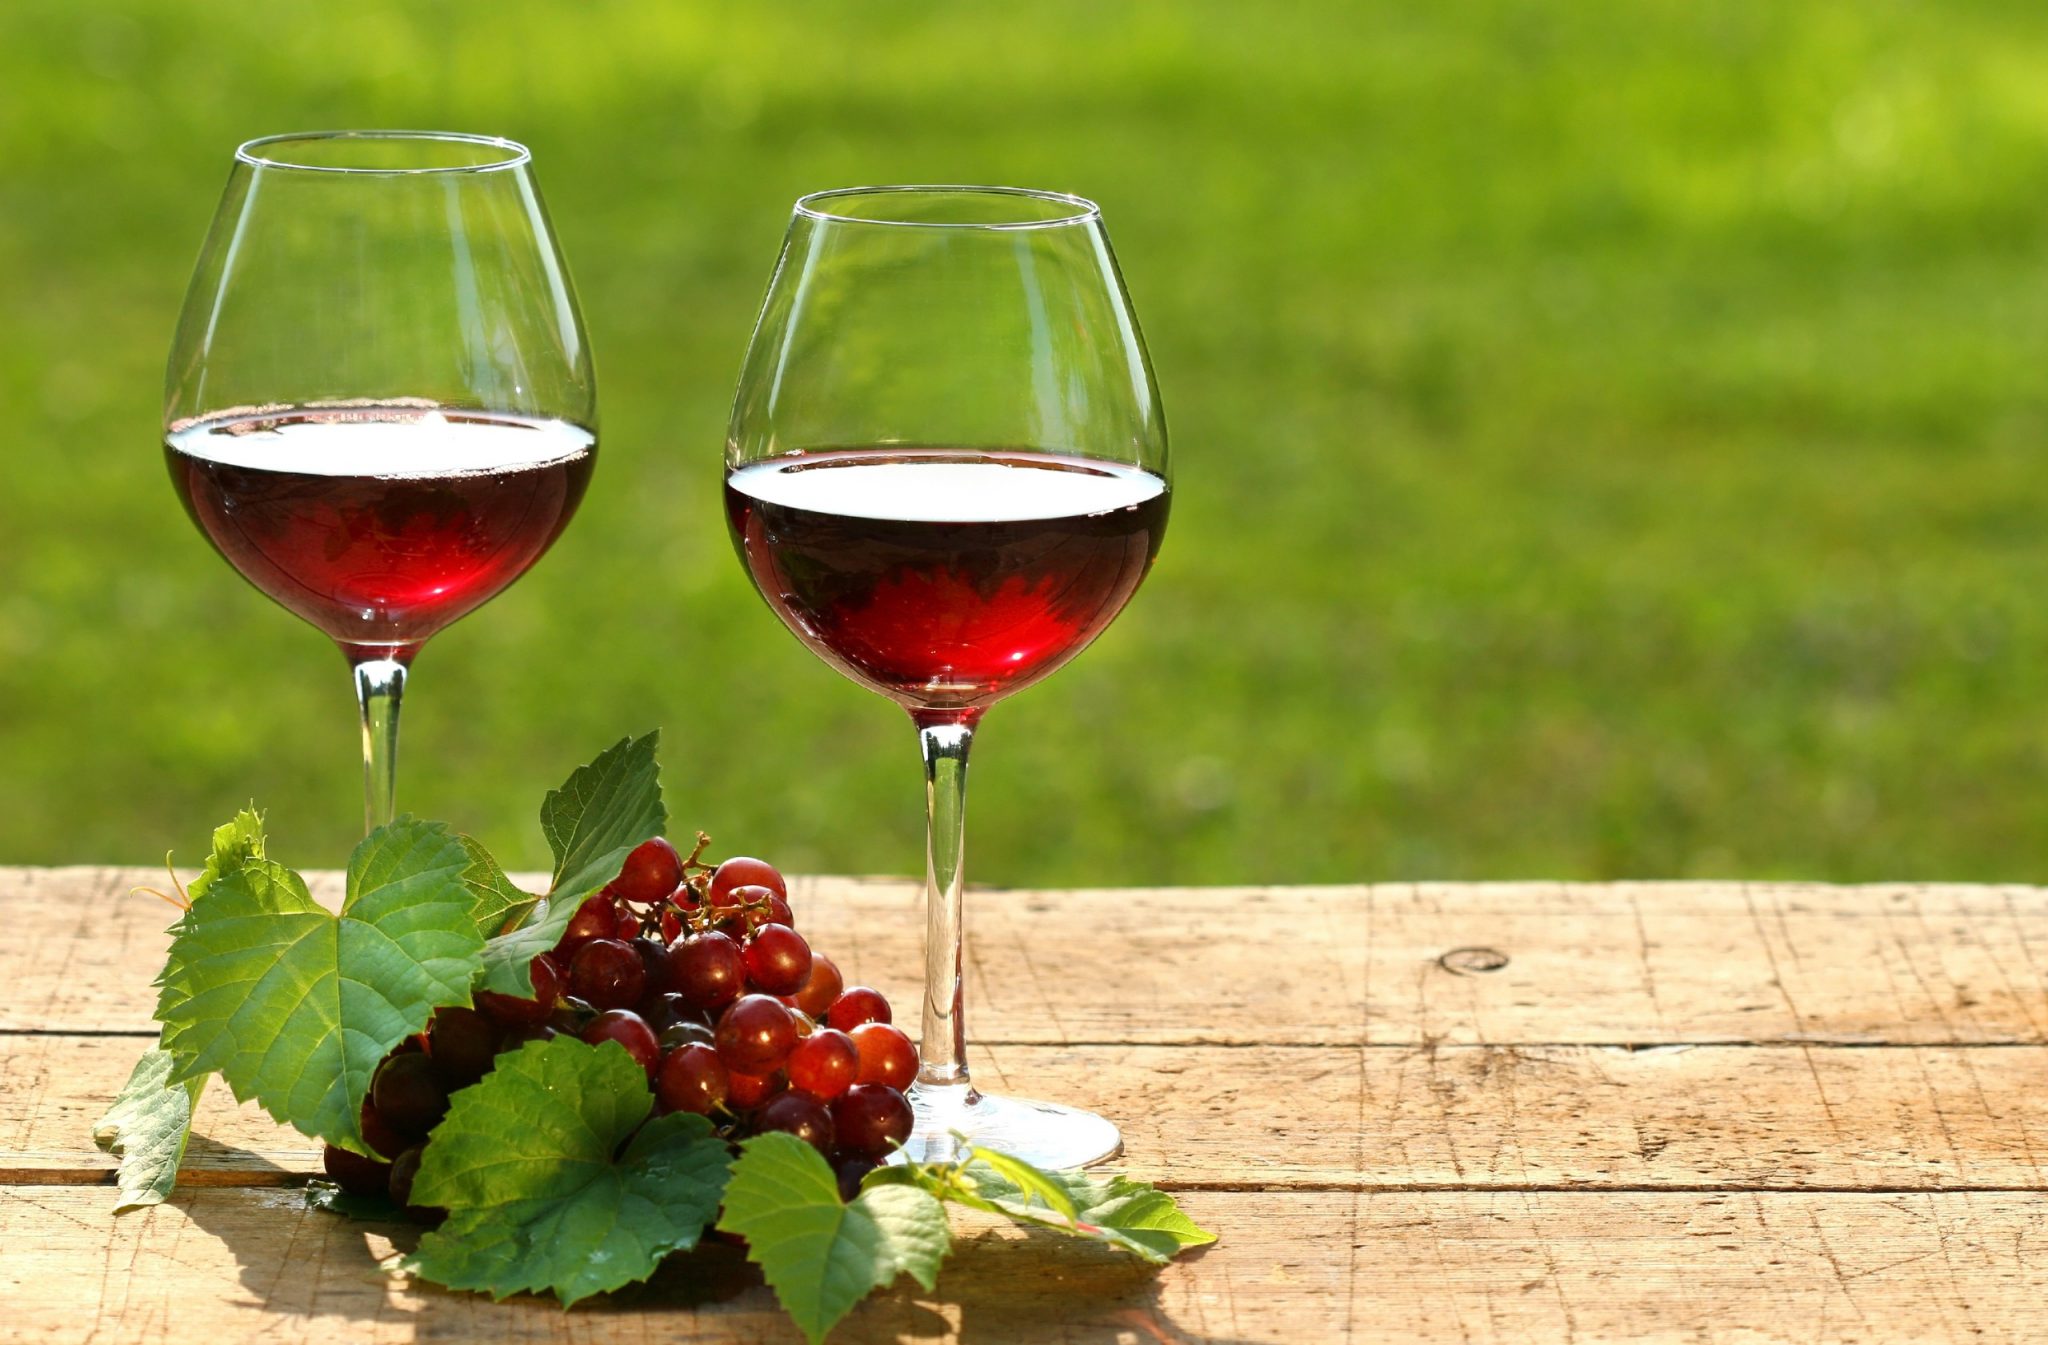 Pairing wines with Comfort Foods